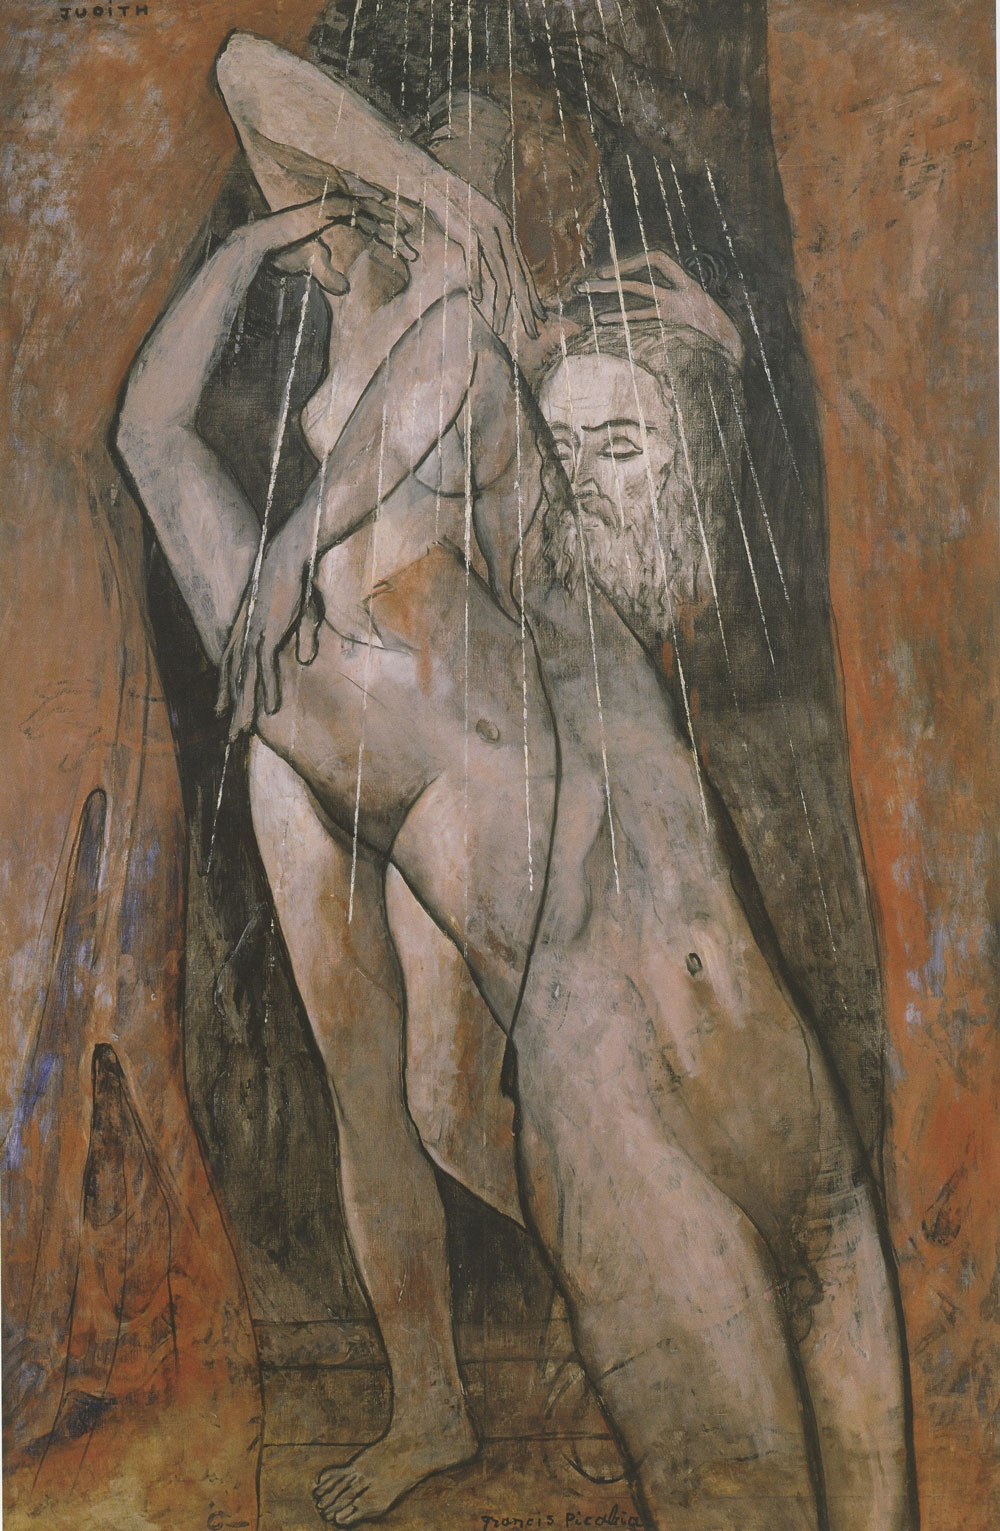 Francis+Picabia-1879-1953 (79).jpg